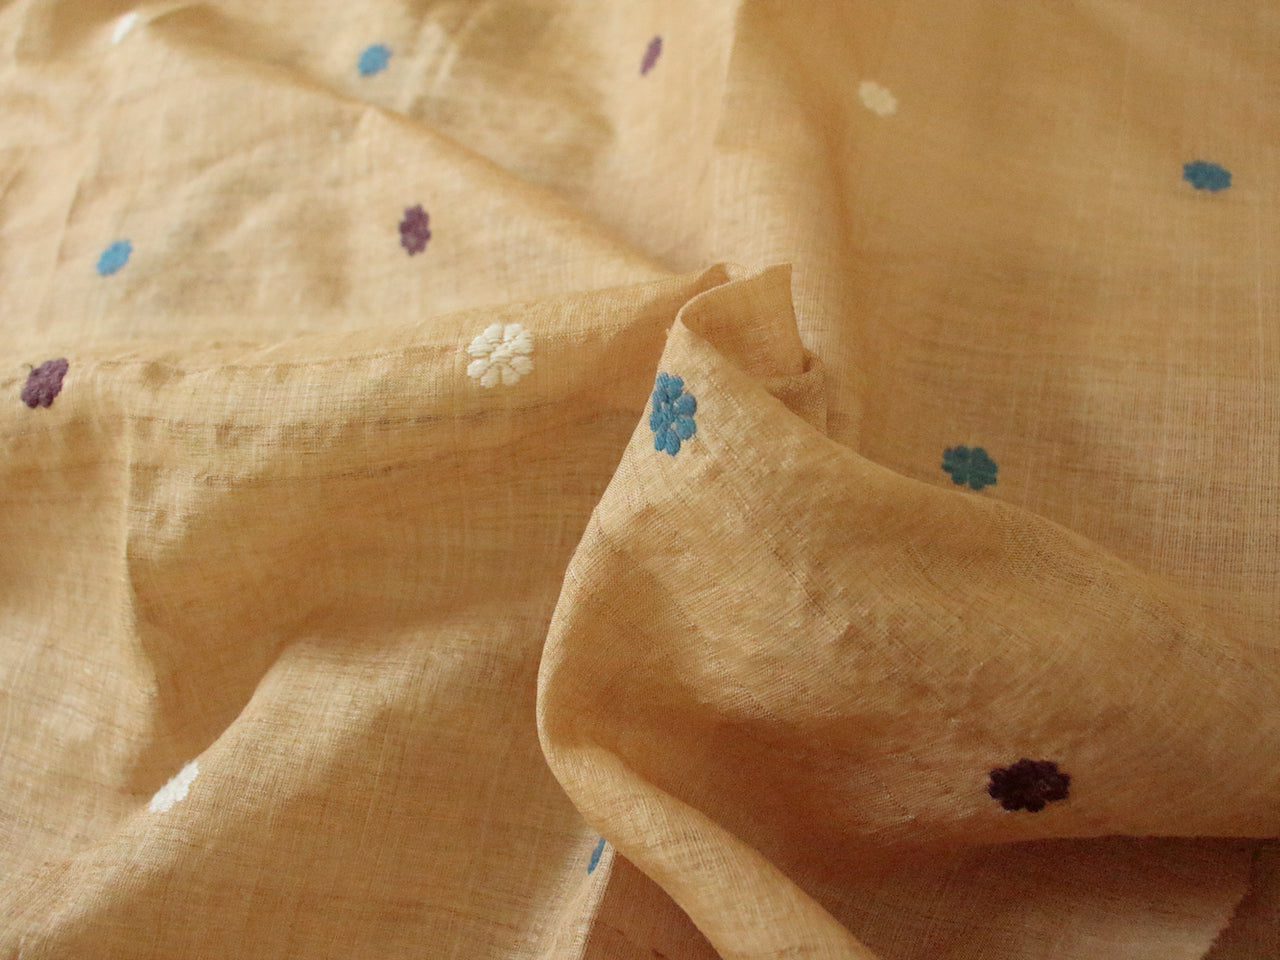 Authentic  Muga Silk Mekhla Chador Set with Natural Dyed Eri Silk Motifs from Assam